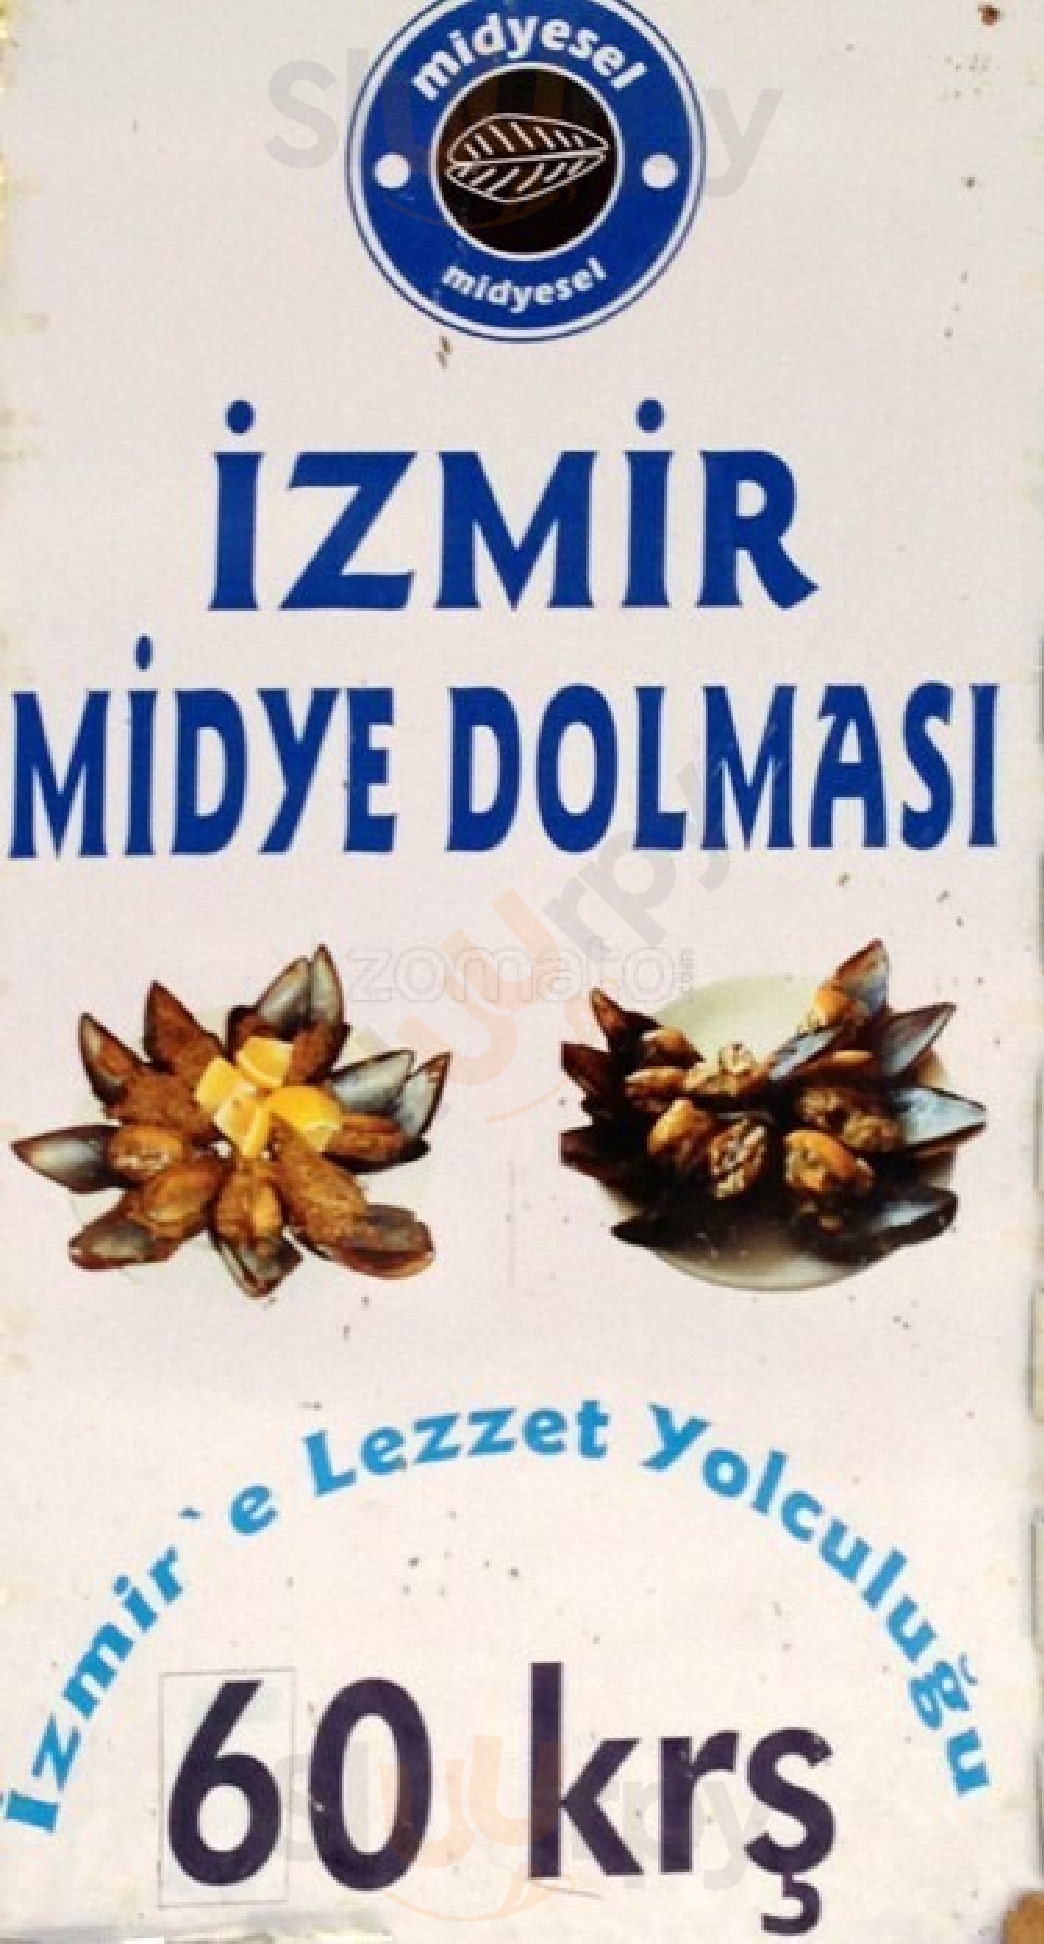 Izmir Midye Dolmasi Midyesel İstanbul Menu - 1